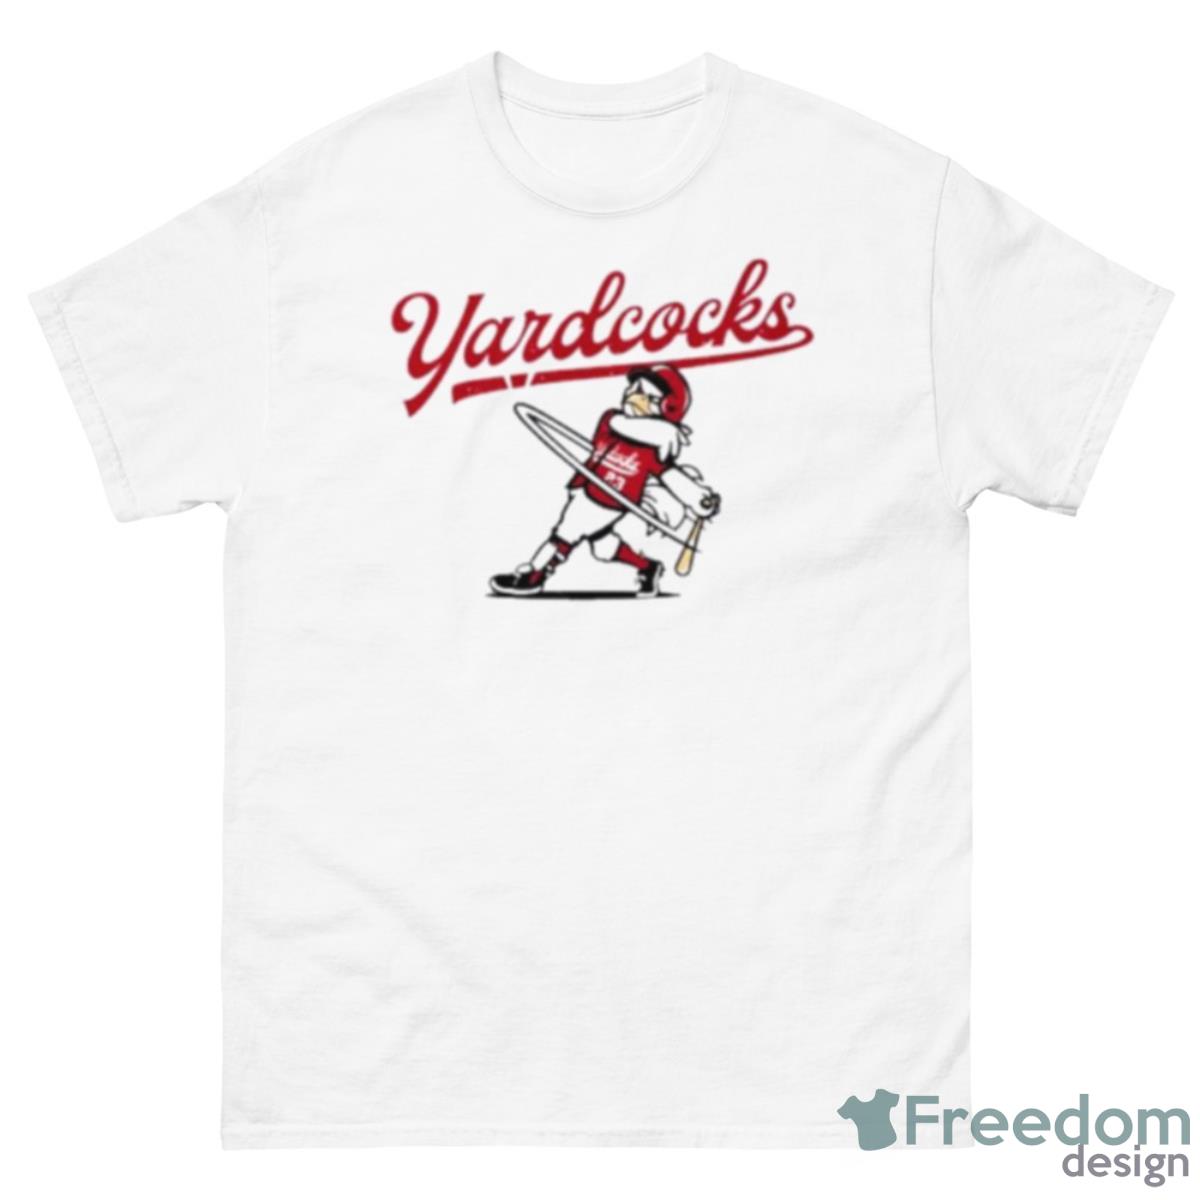 Fauxback South Carolina Gamecocks Yardcocks Baseball Shirt - Freedomdesign